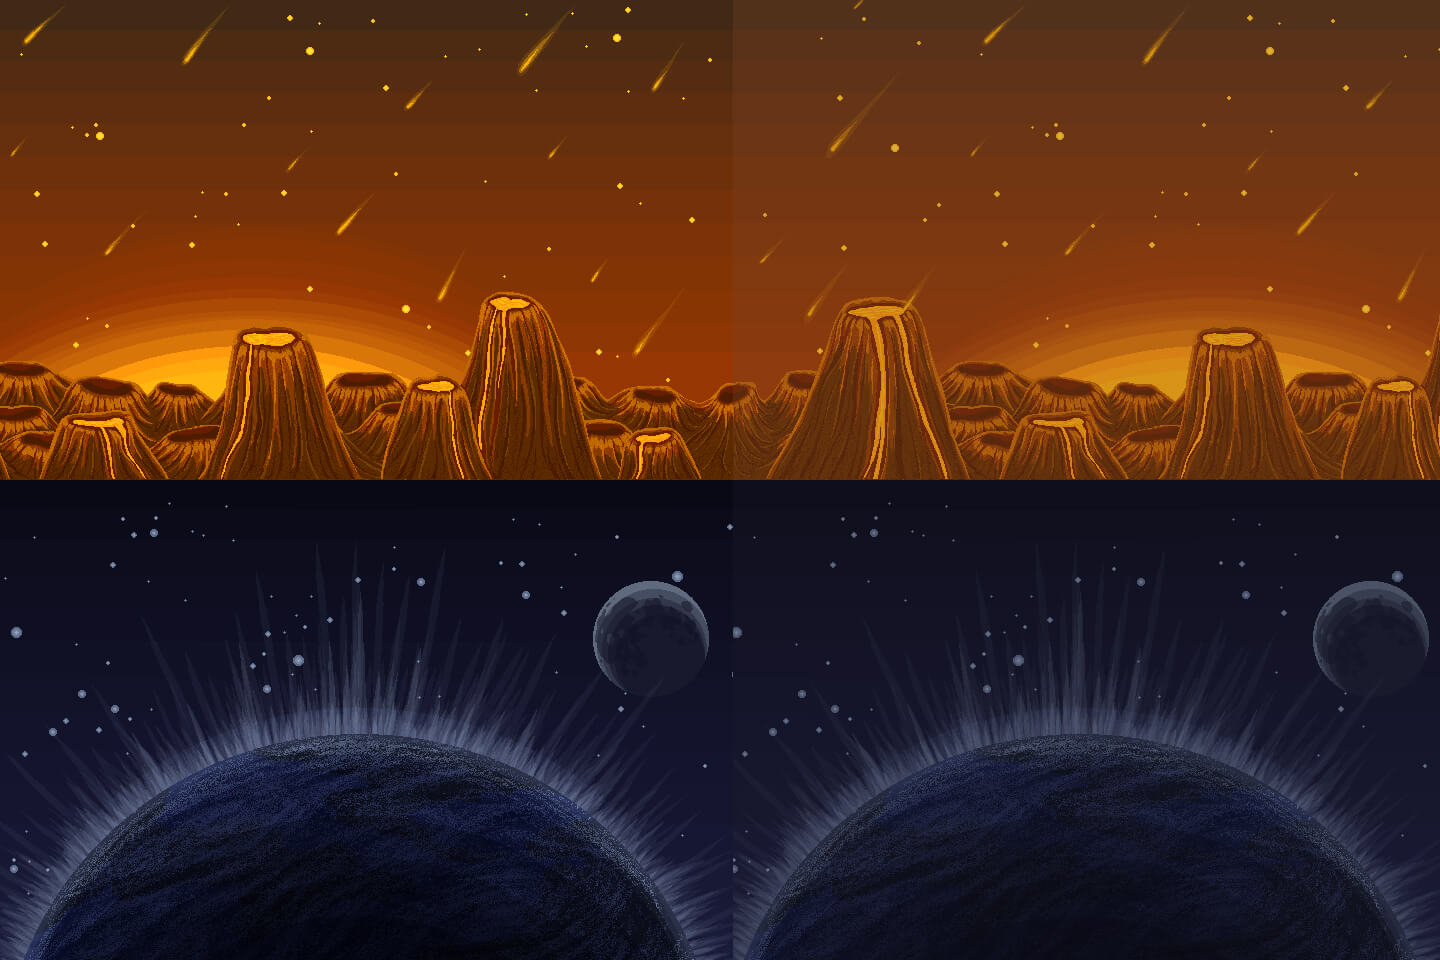 Pixel Art Space 2D Game Backgrounds - CraftPix.net